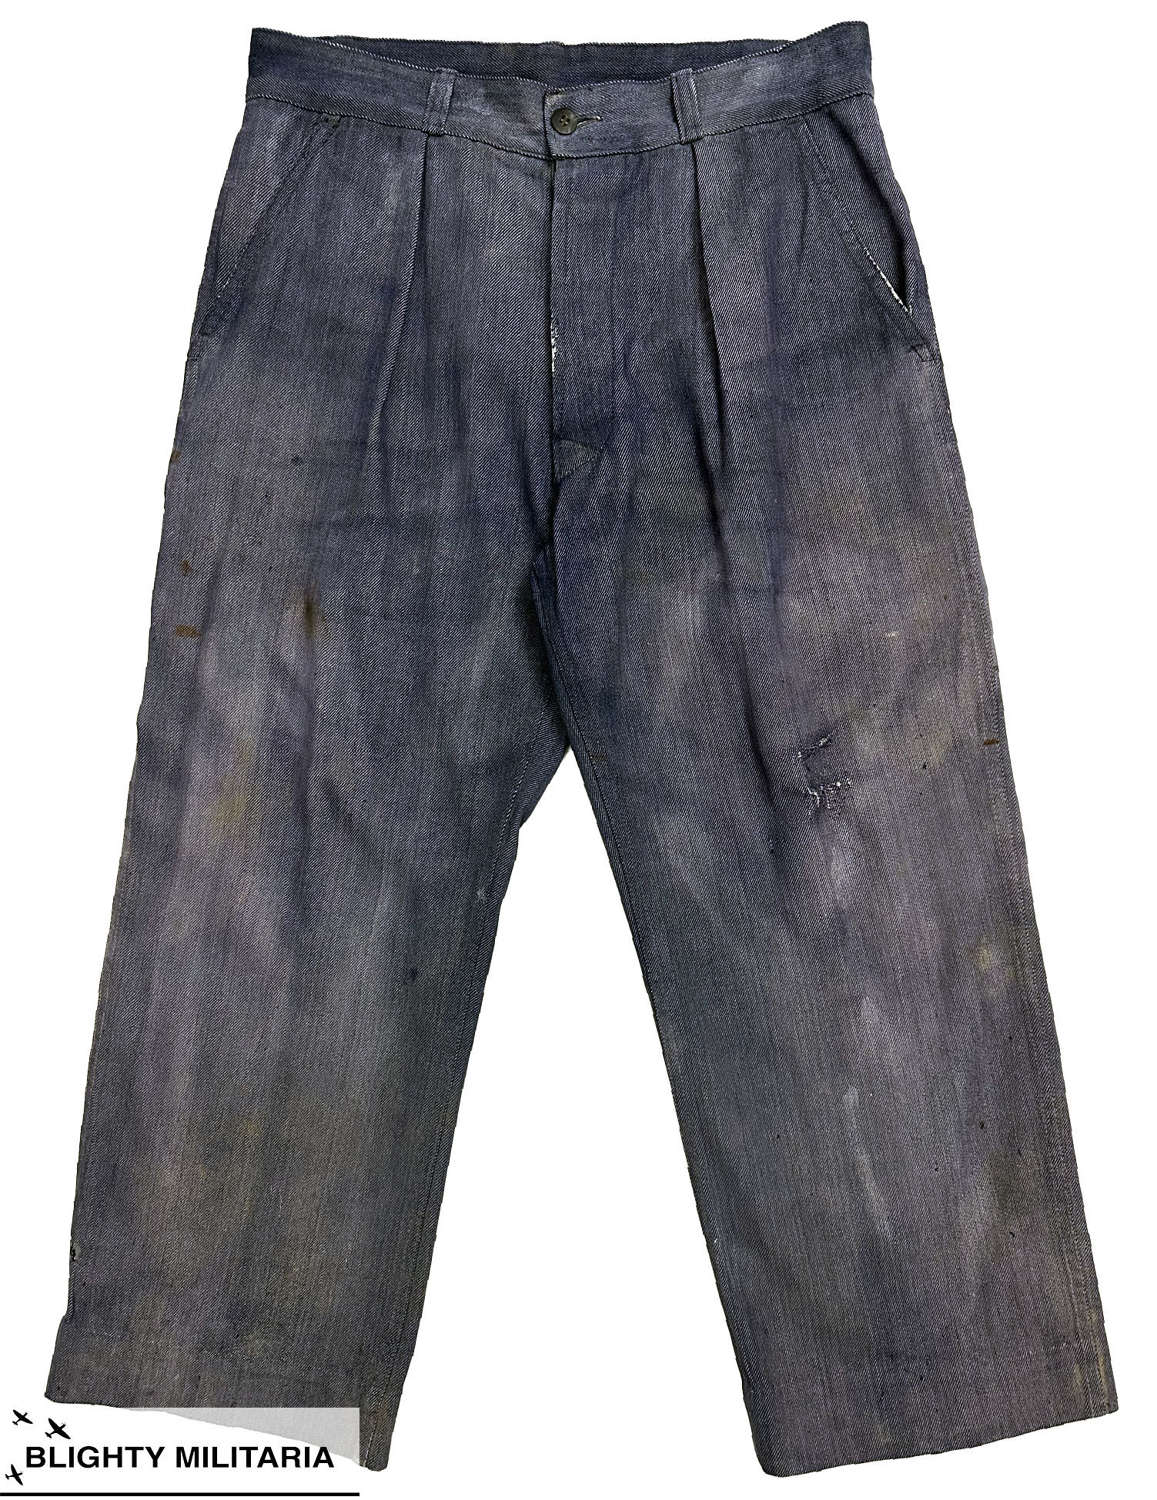 Original 1950s French Navy Denim Work Trousers - Size 32x35